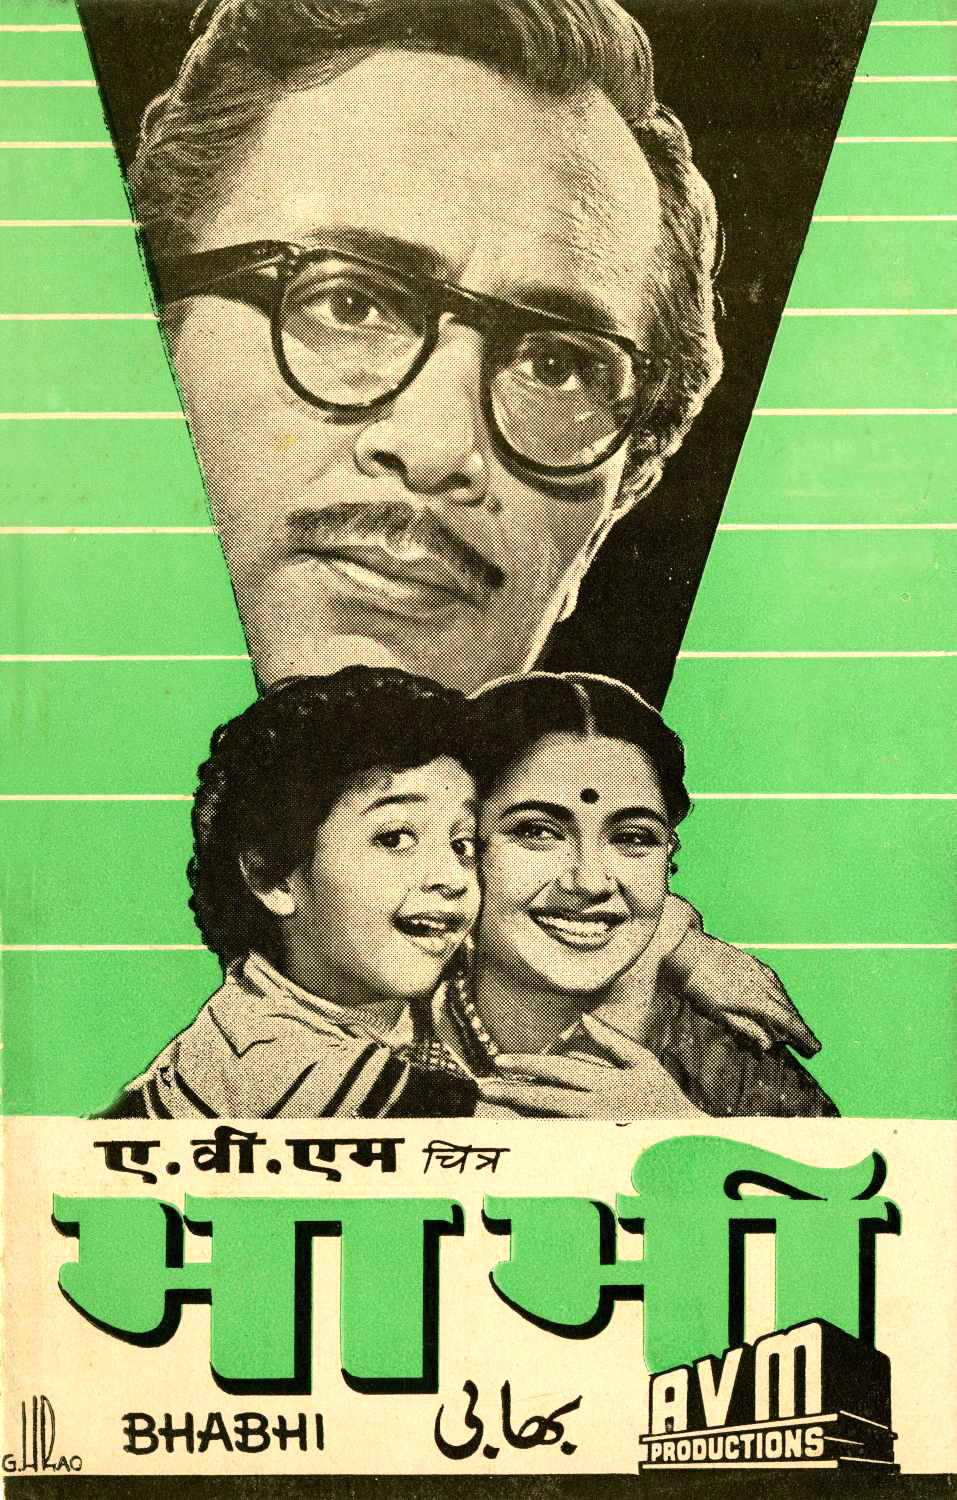 Bhabhi Review Bhabhi Movie Review Bhabhi 1957 Public Review Film Review 5965